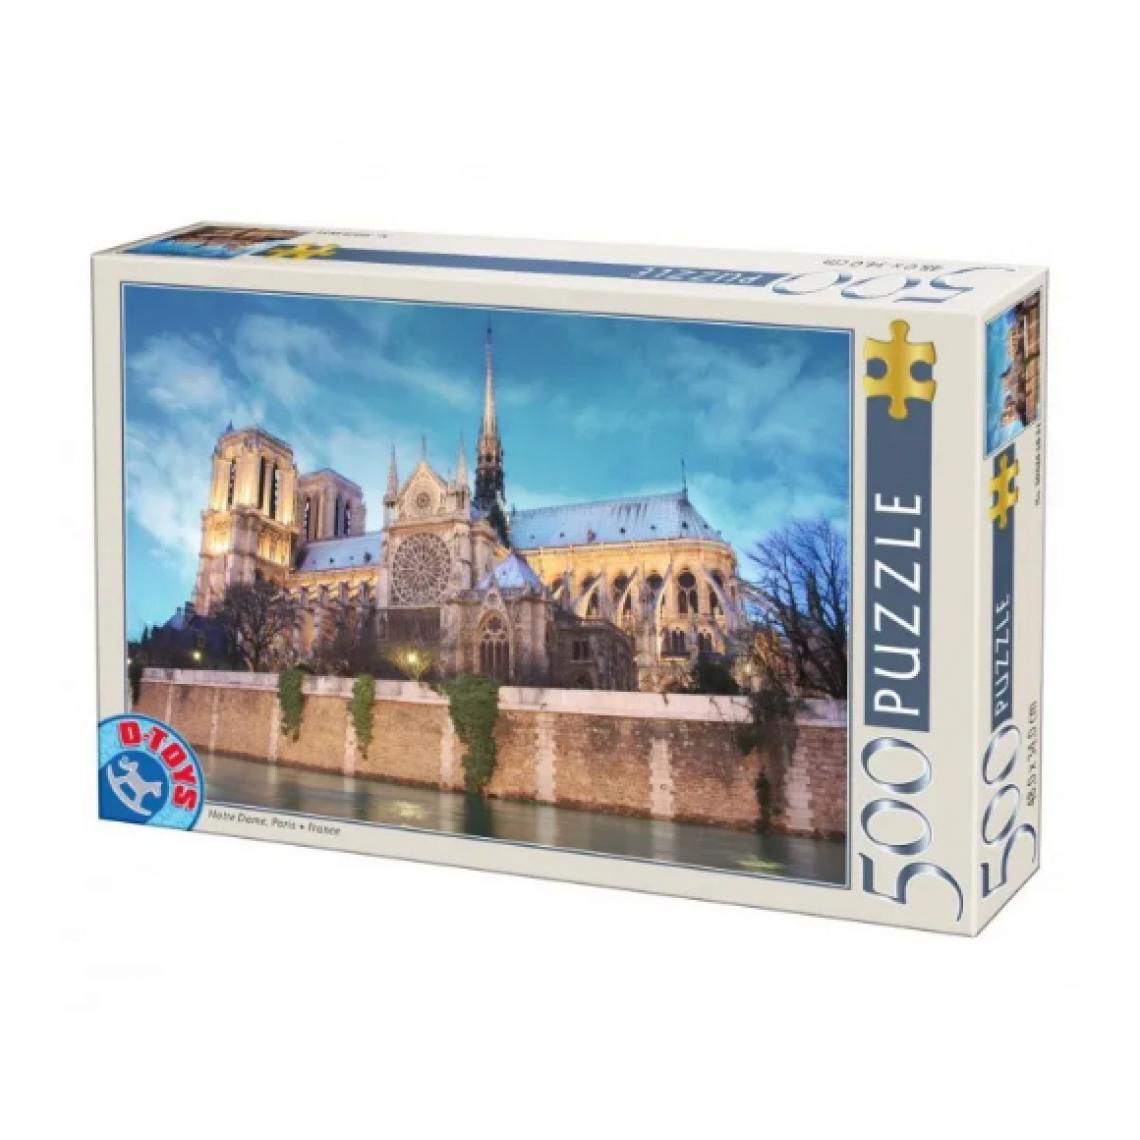 D-Toys - Puzzle Cathedrale Notre Dame 500 pieces - Animaux